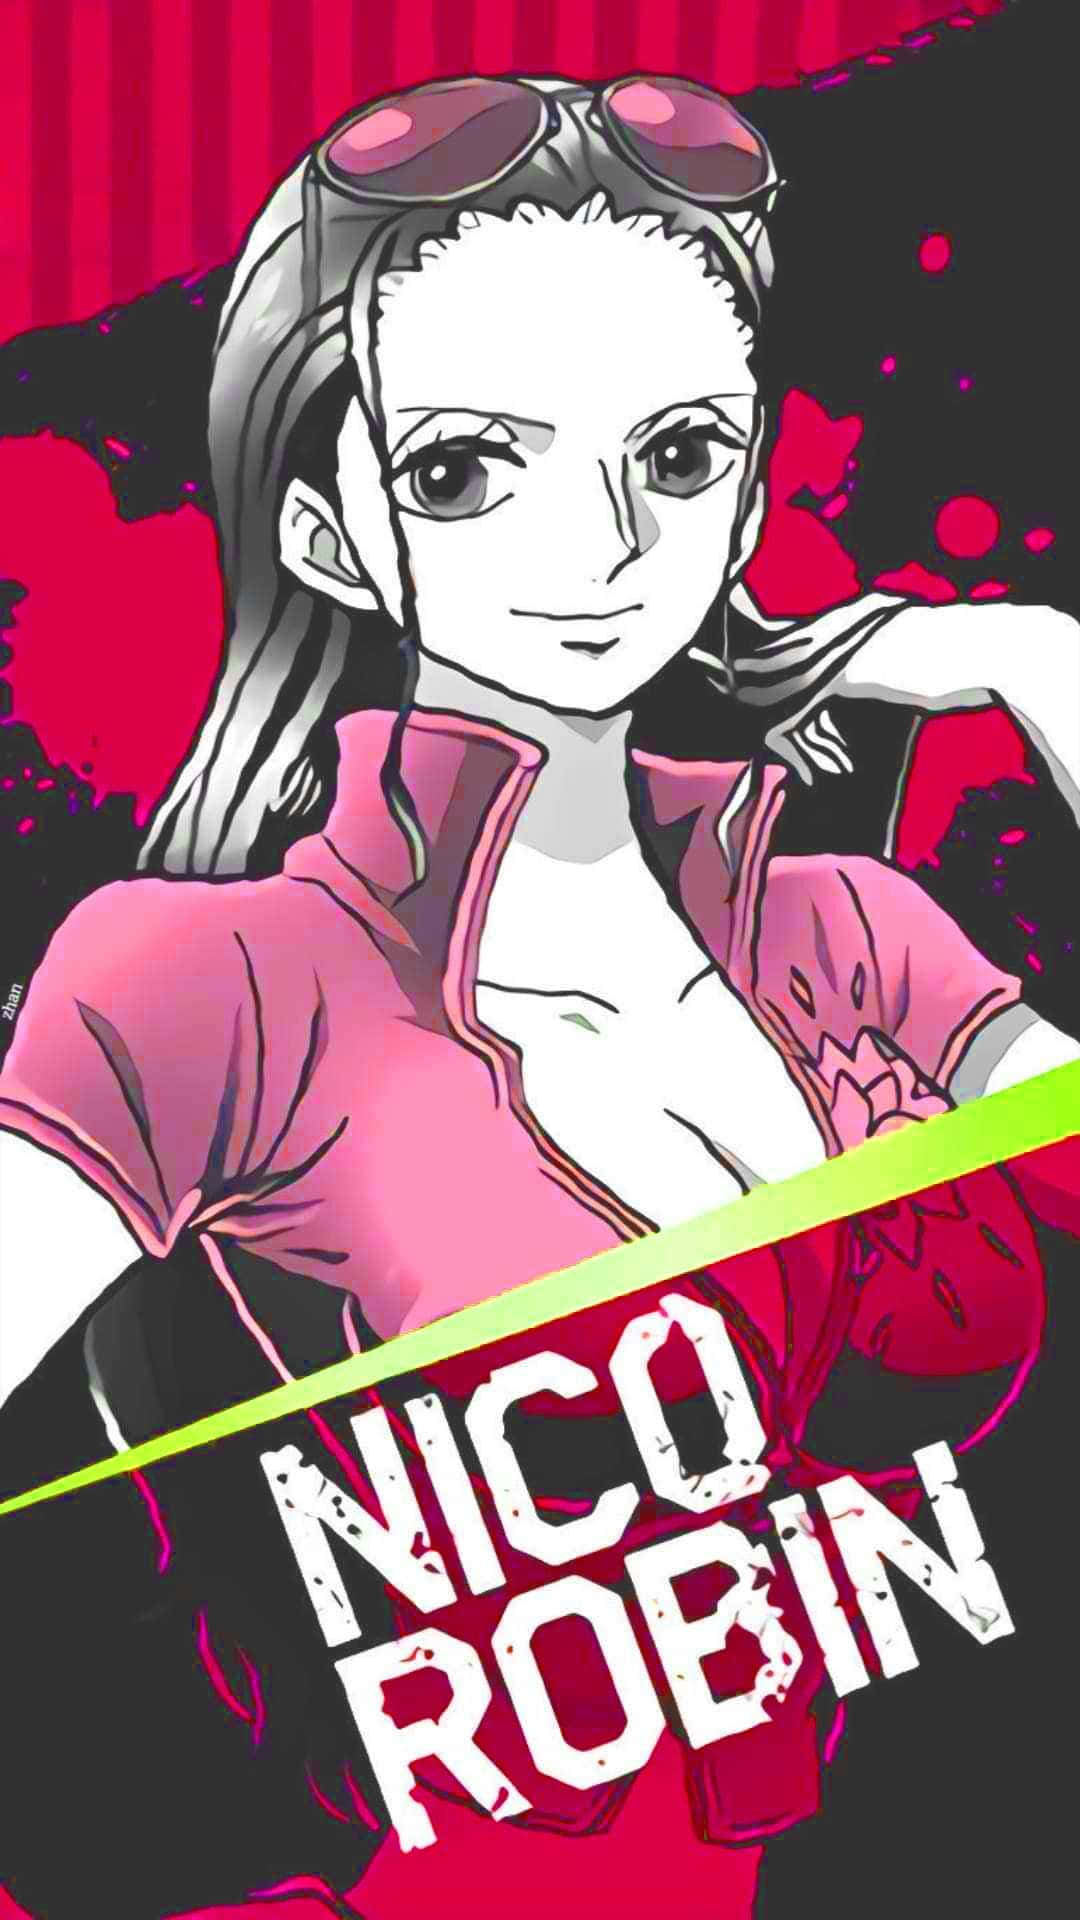 Wallpaper ID 336741  Anime One Piece Phone Wallpaper Nico Robin  1284x2778 free download